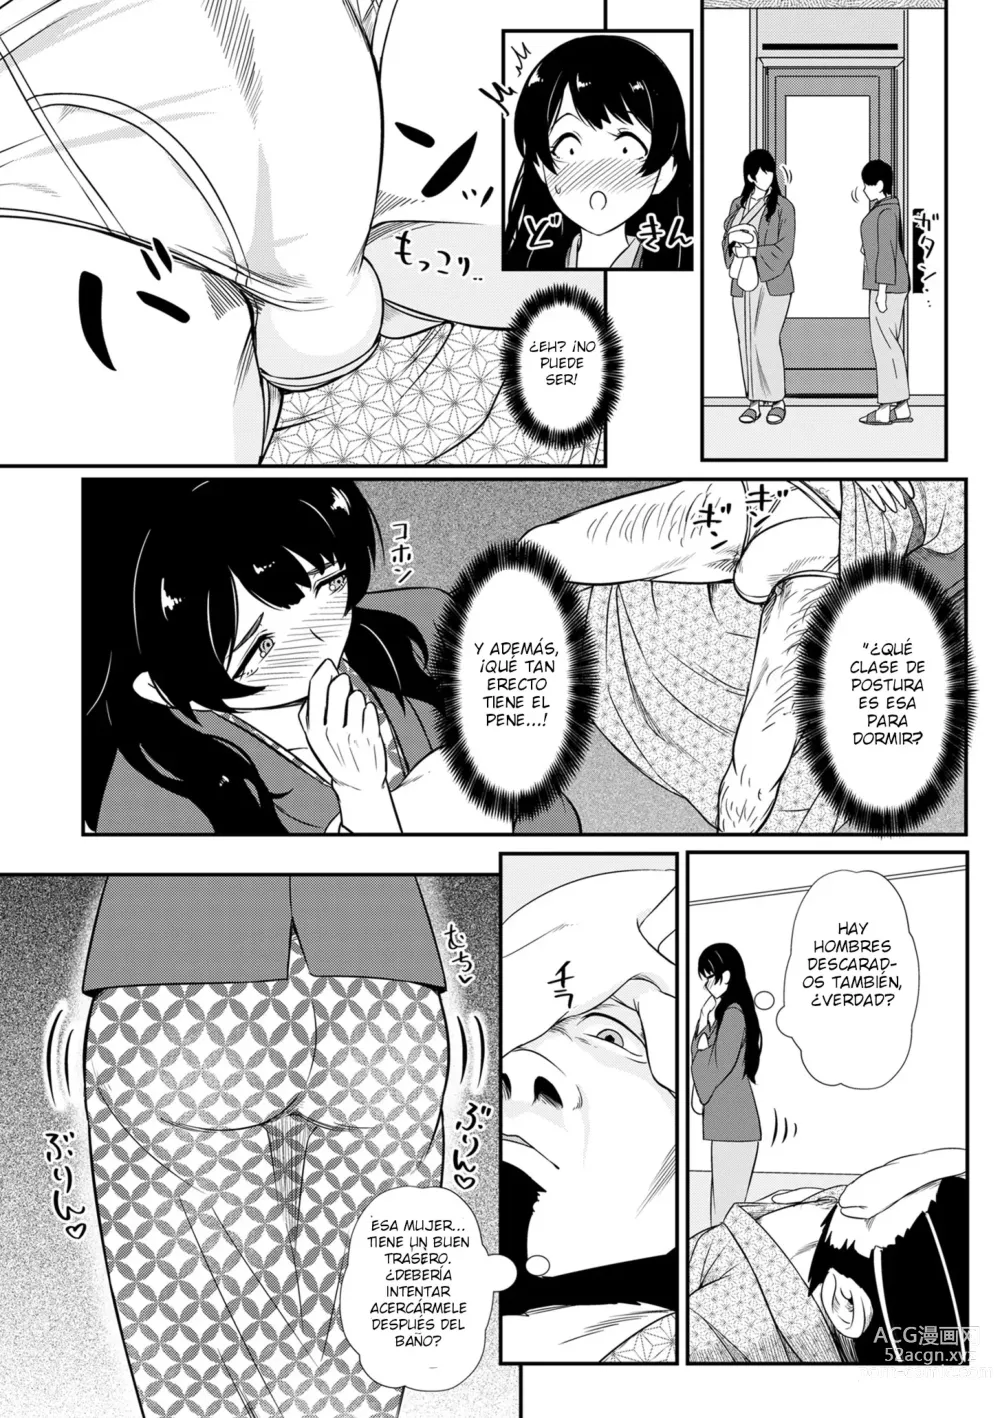 Page 2 of manga Haha wa tabi no owari ni...